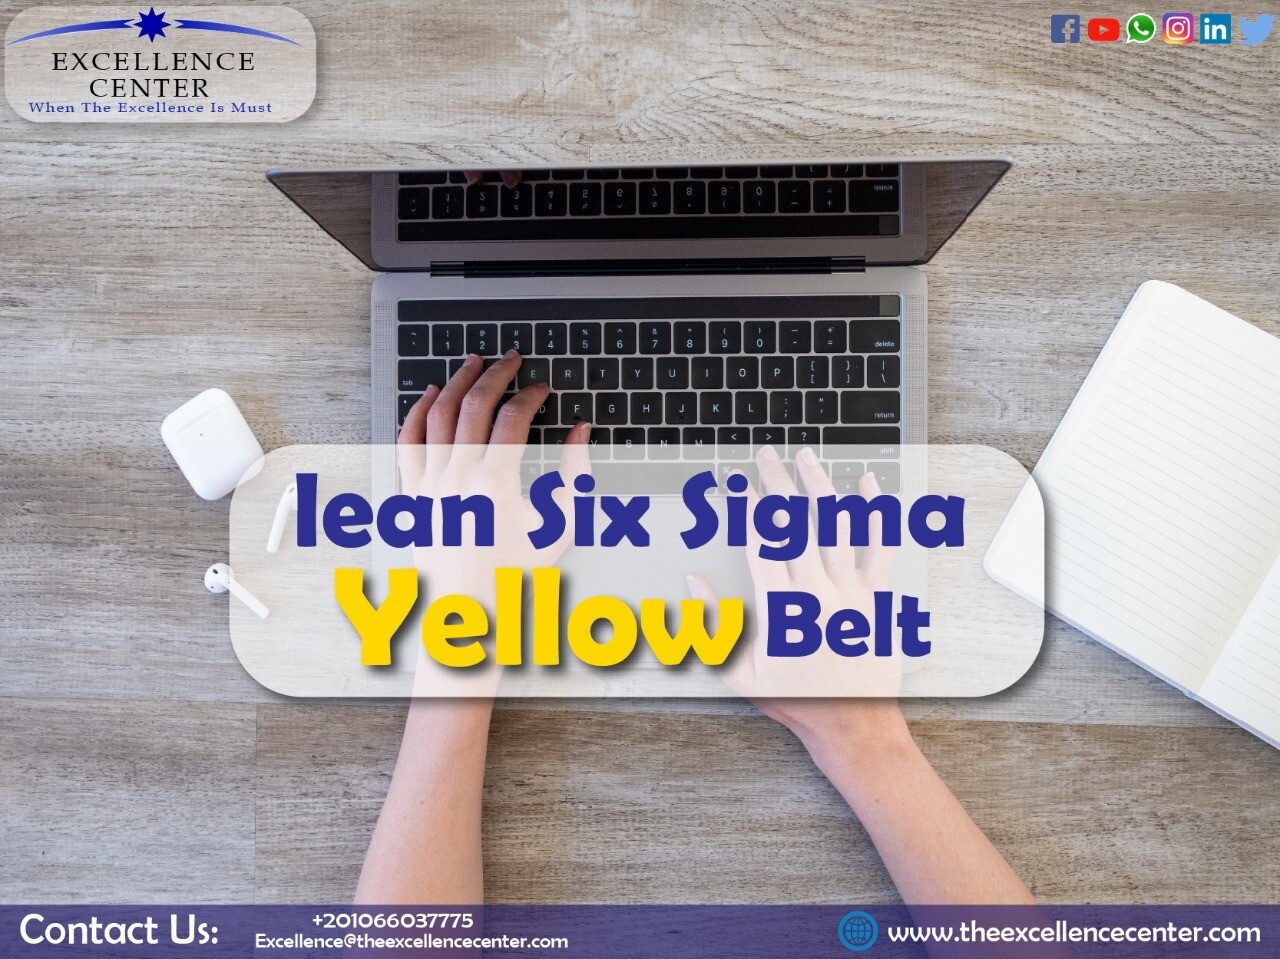 Lean Six Sigma Yellow Belt Training Course - Online Training